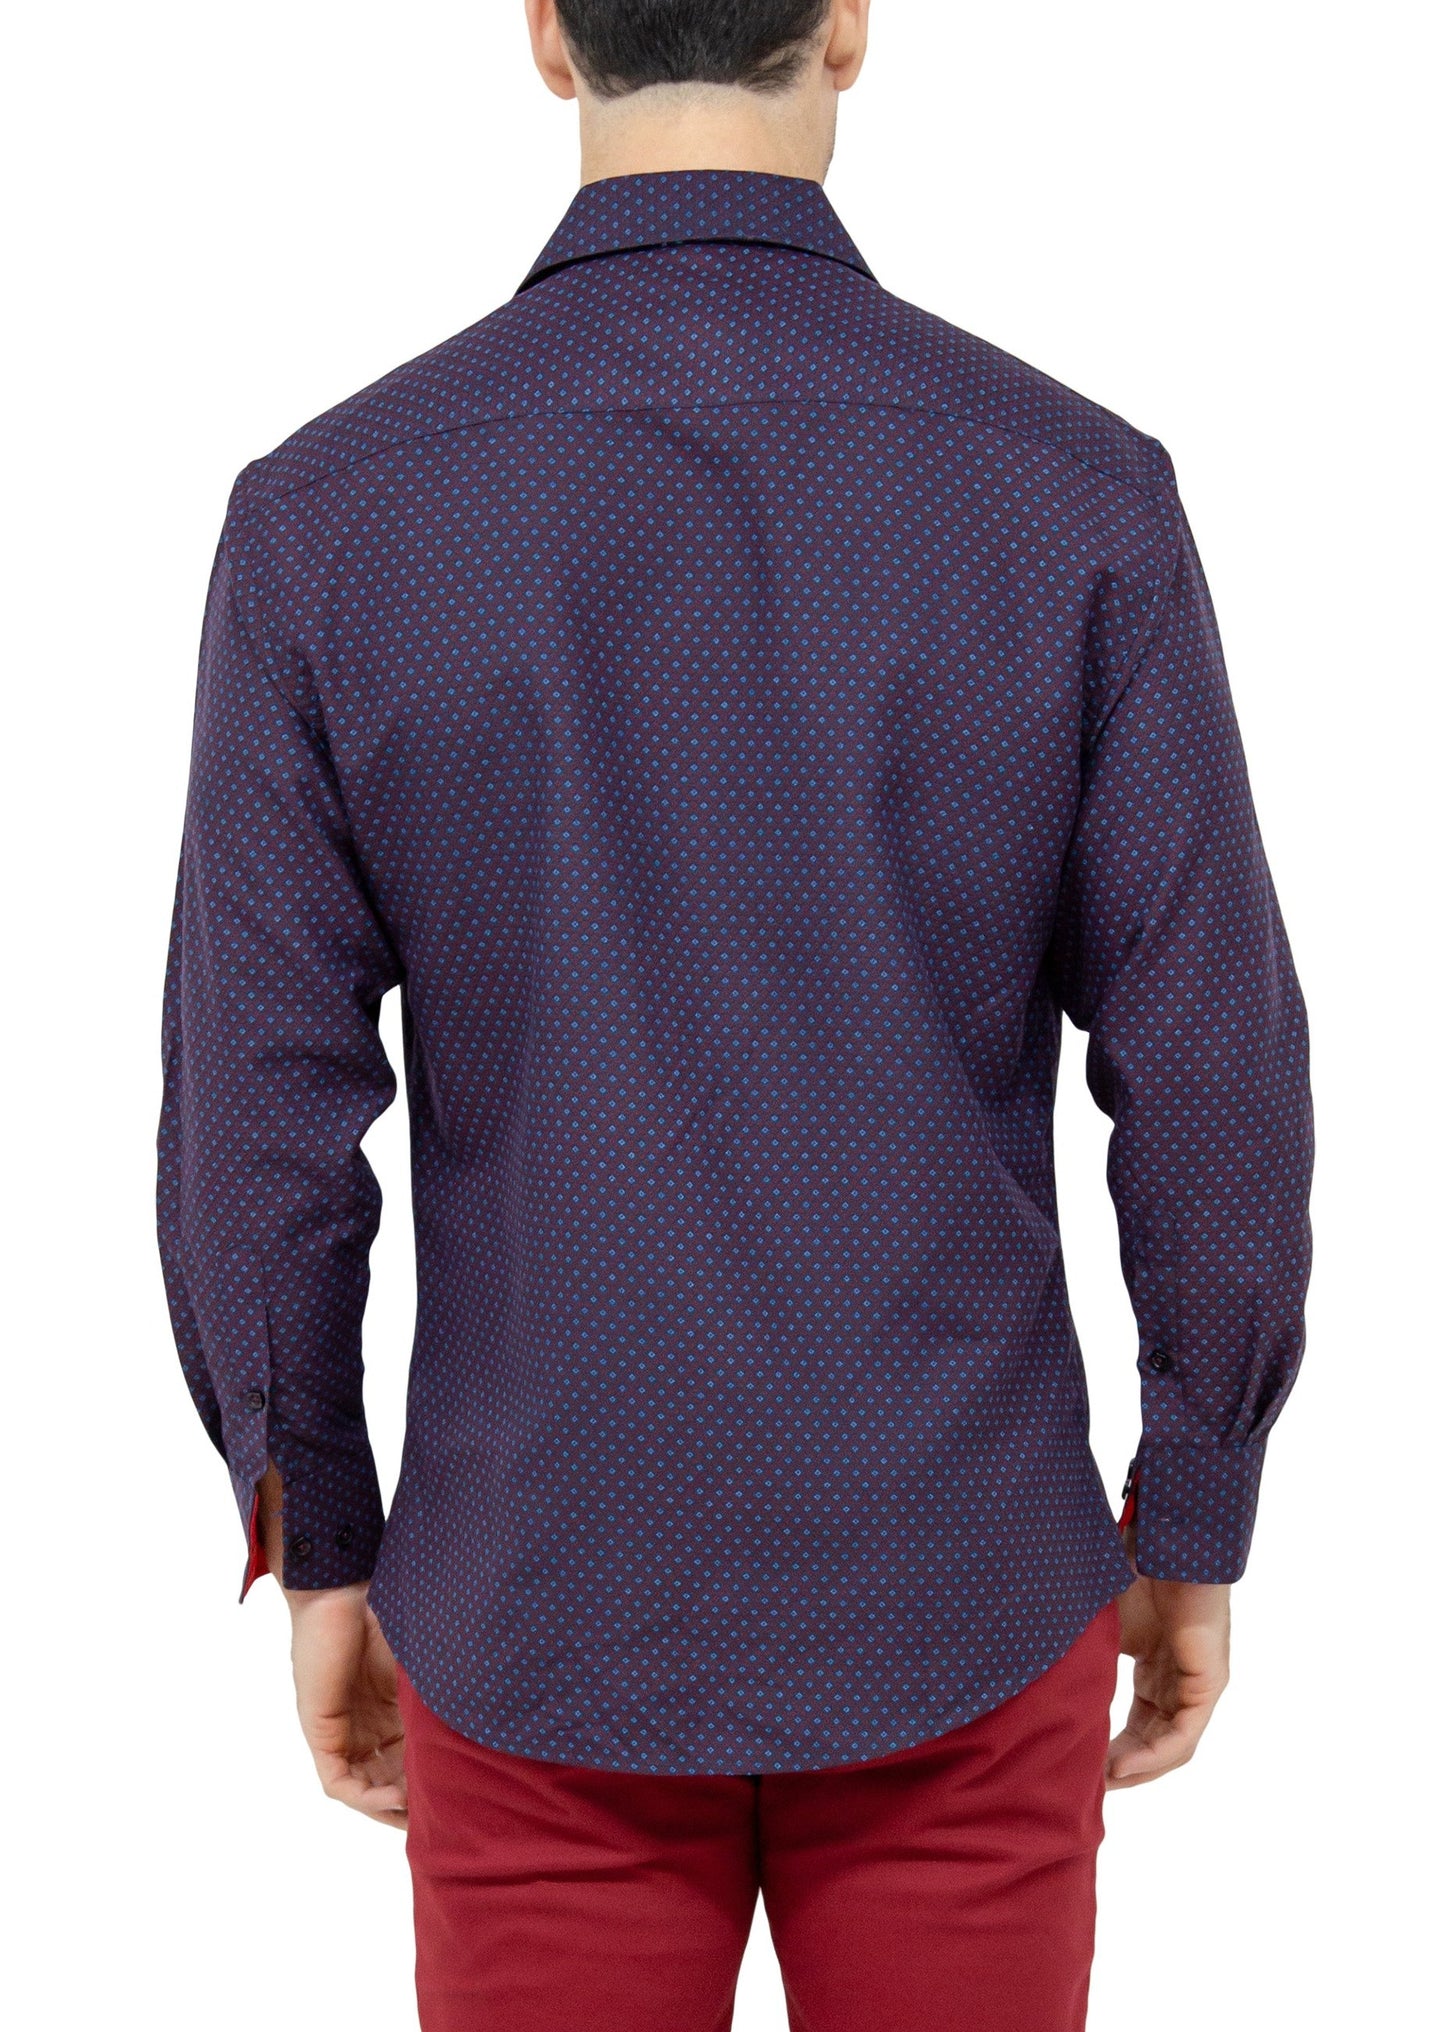 bc-182392-red-button-up-long-sleeve-dress-shirt